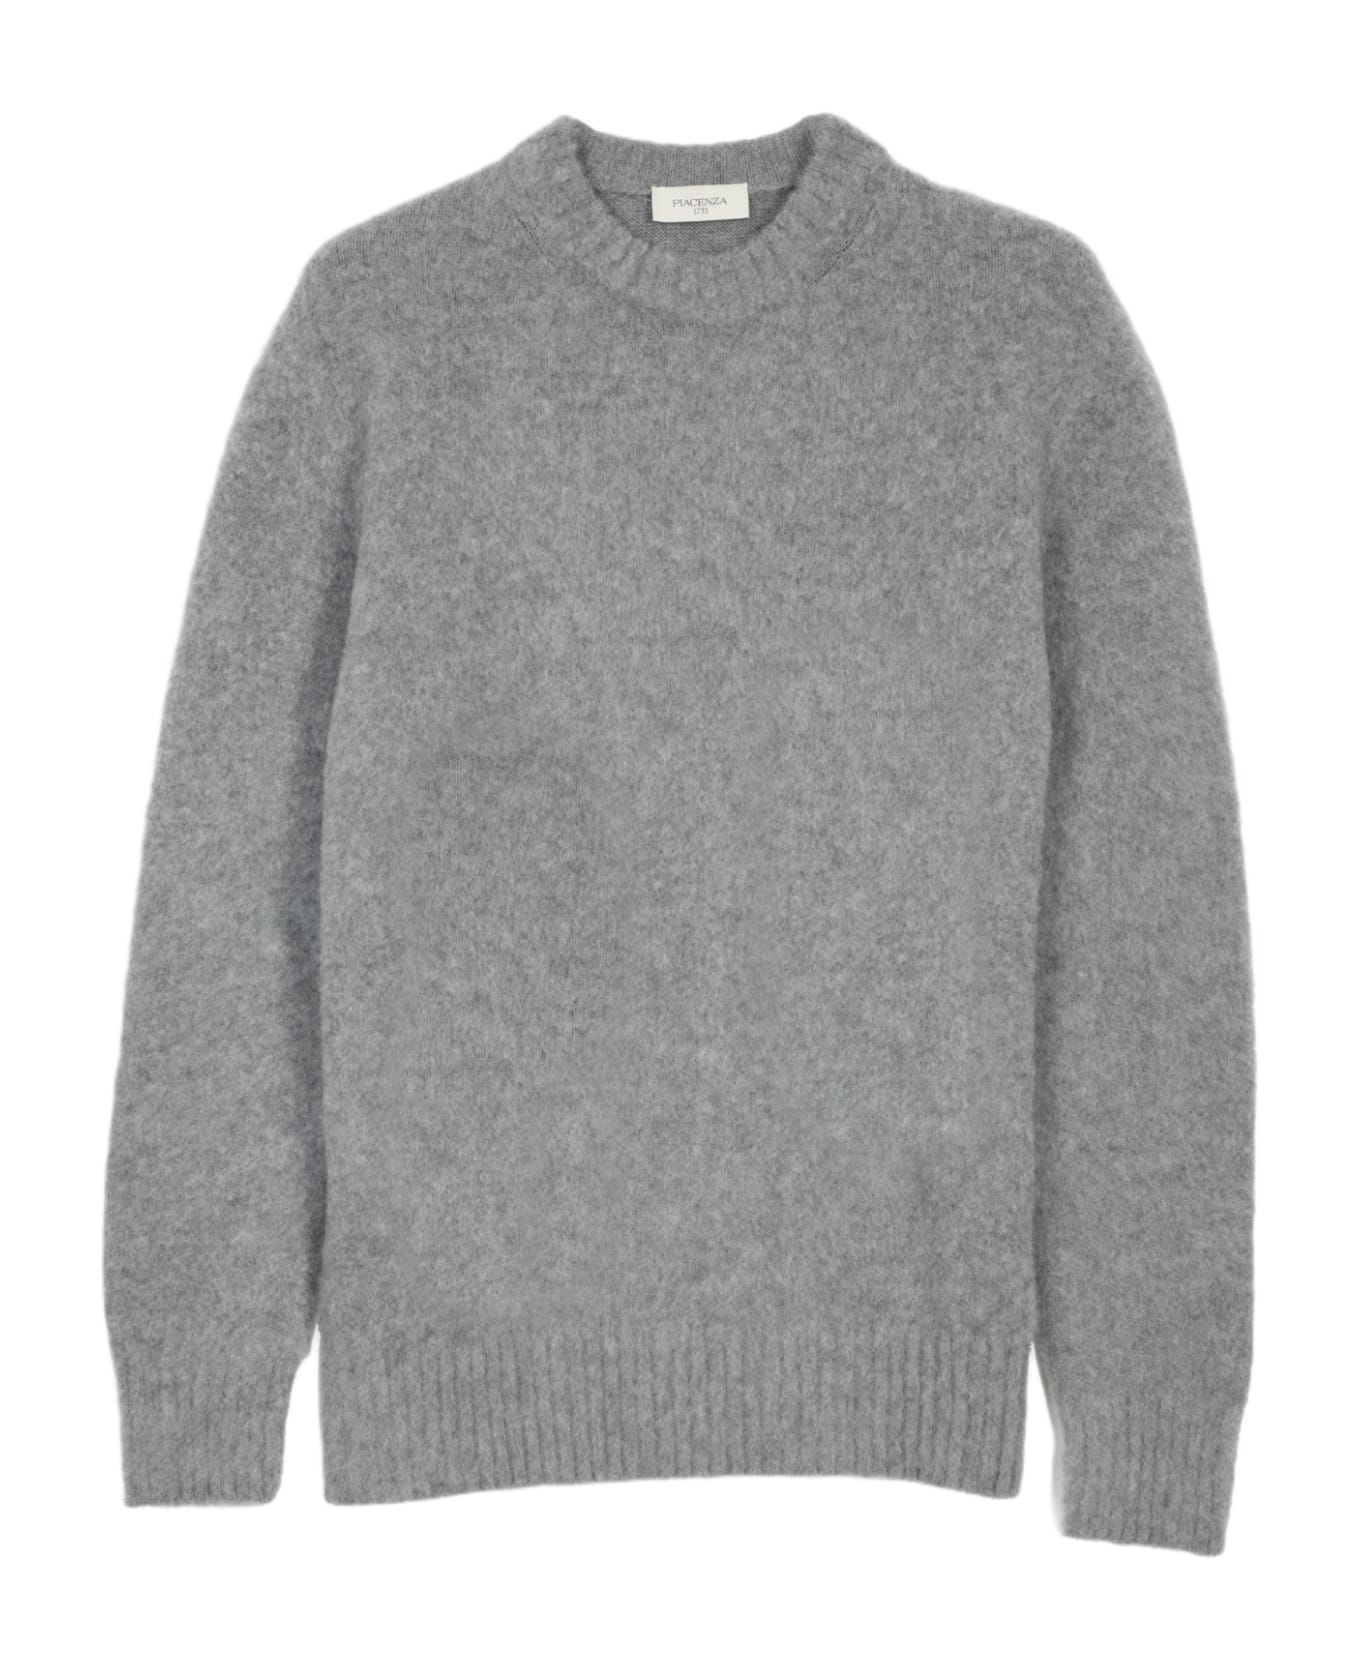 Piacenza Cashmere Girocollo Light grey wool sweater - Grigio